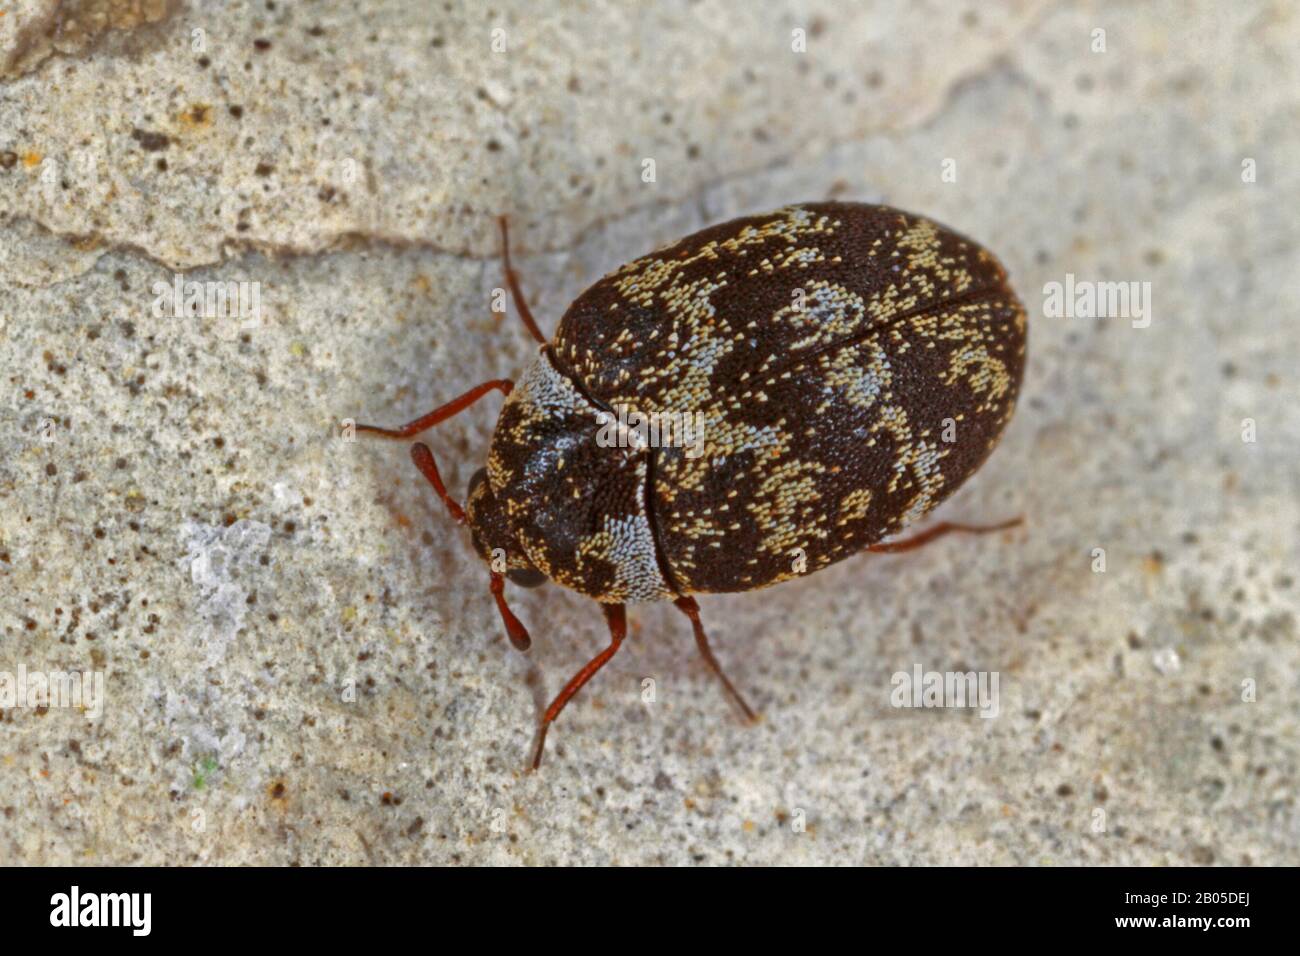 skin beetles (Anthrenus fuscus), sits on a stone, Germany Stock Photo